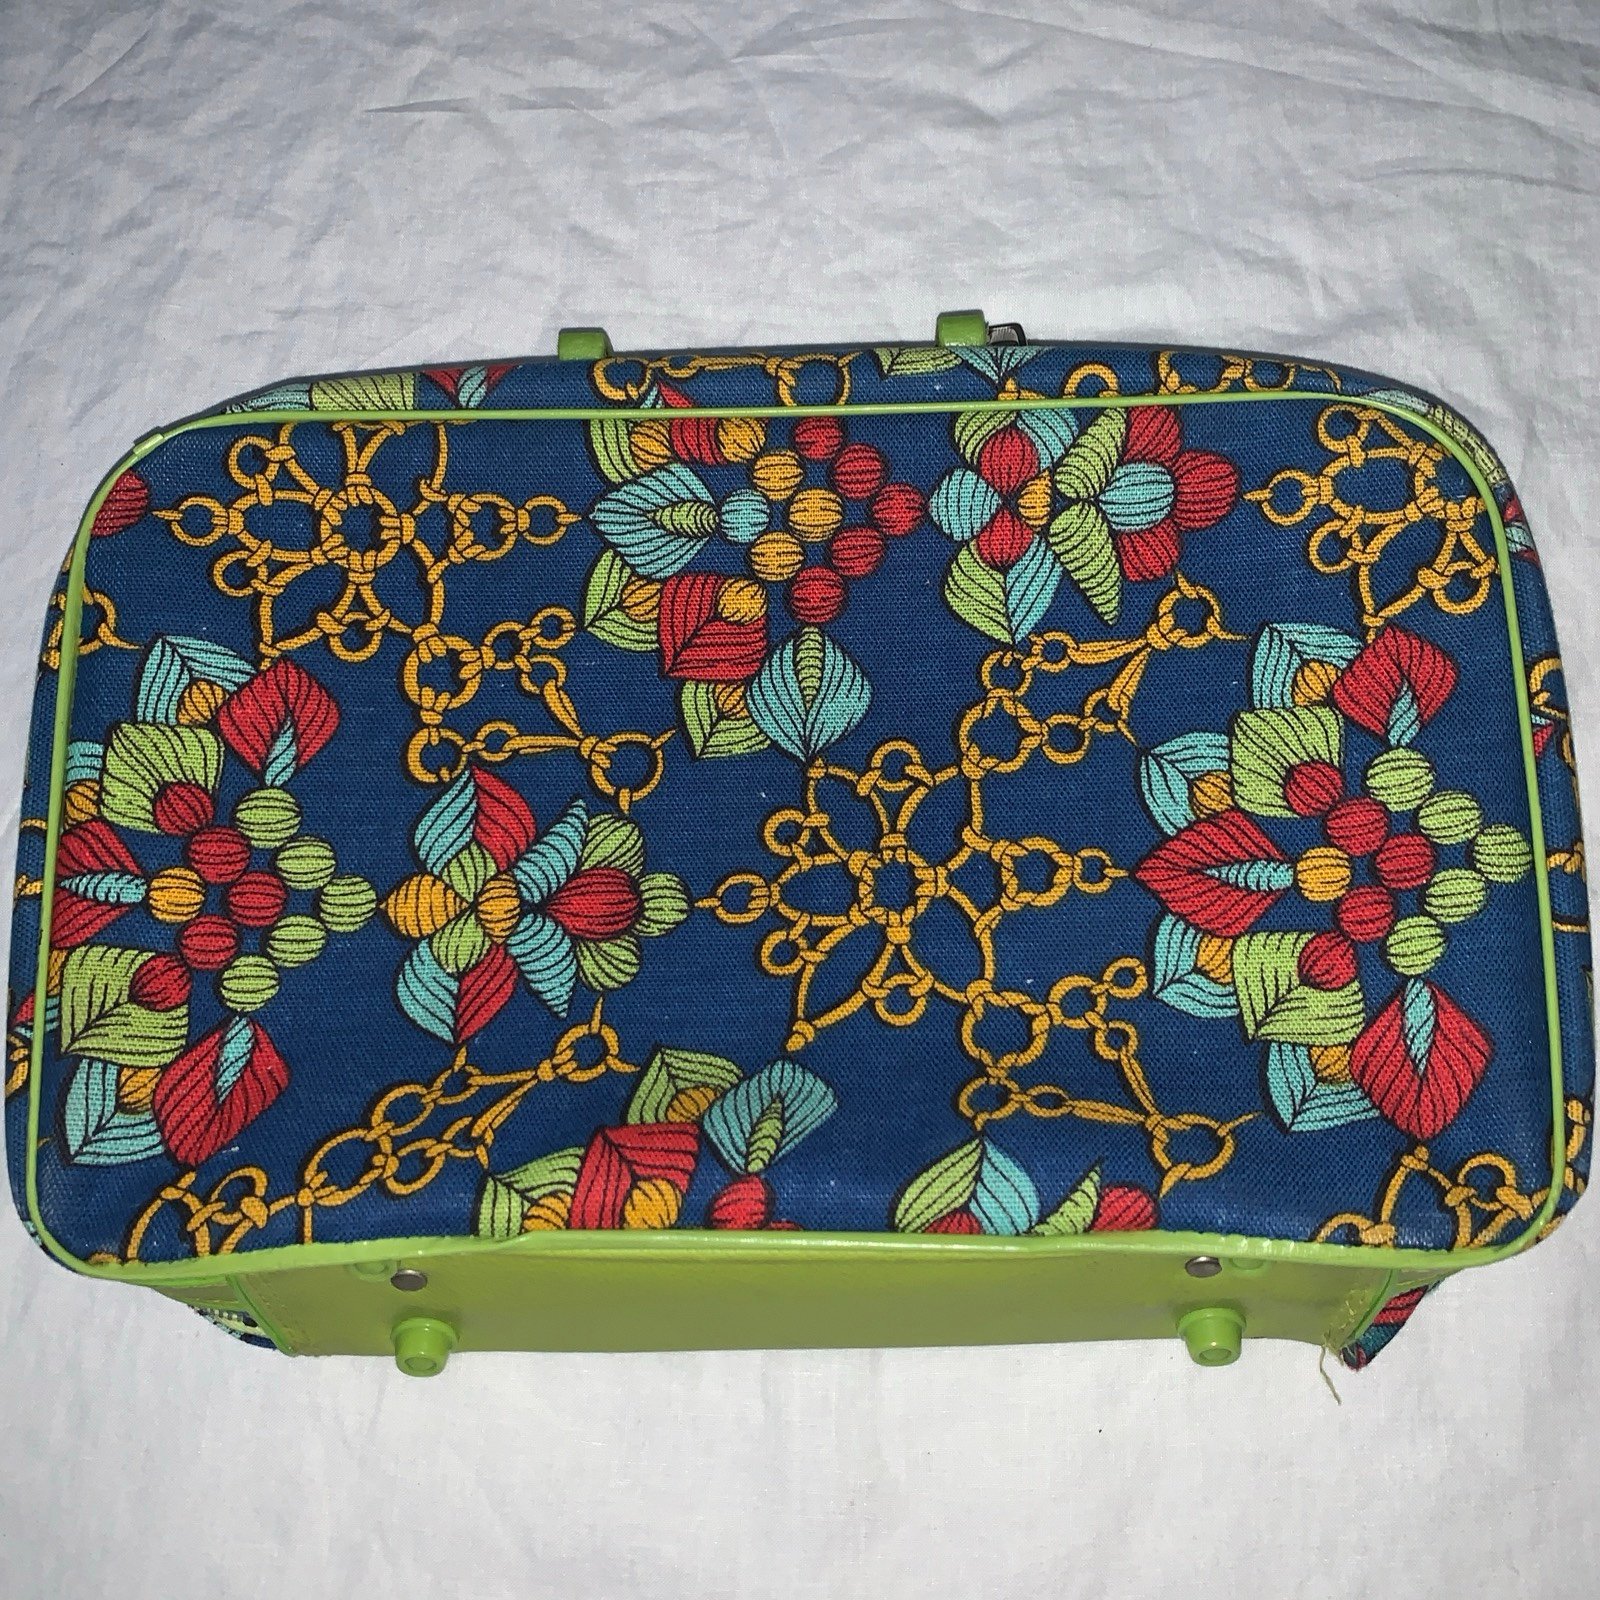 Penguin Travelers Cloth Suitcase with Lock Mod Japan Collectible Decor Vintage F4c8T2vzp